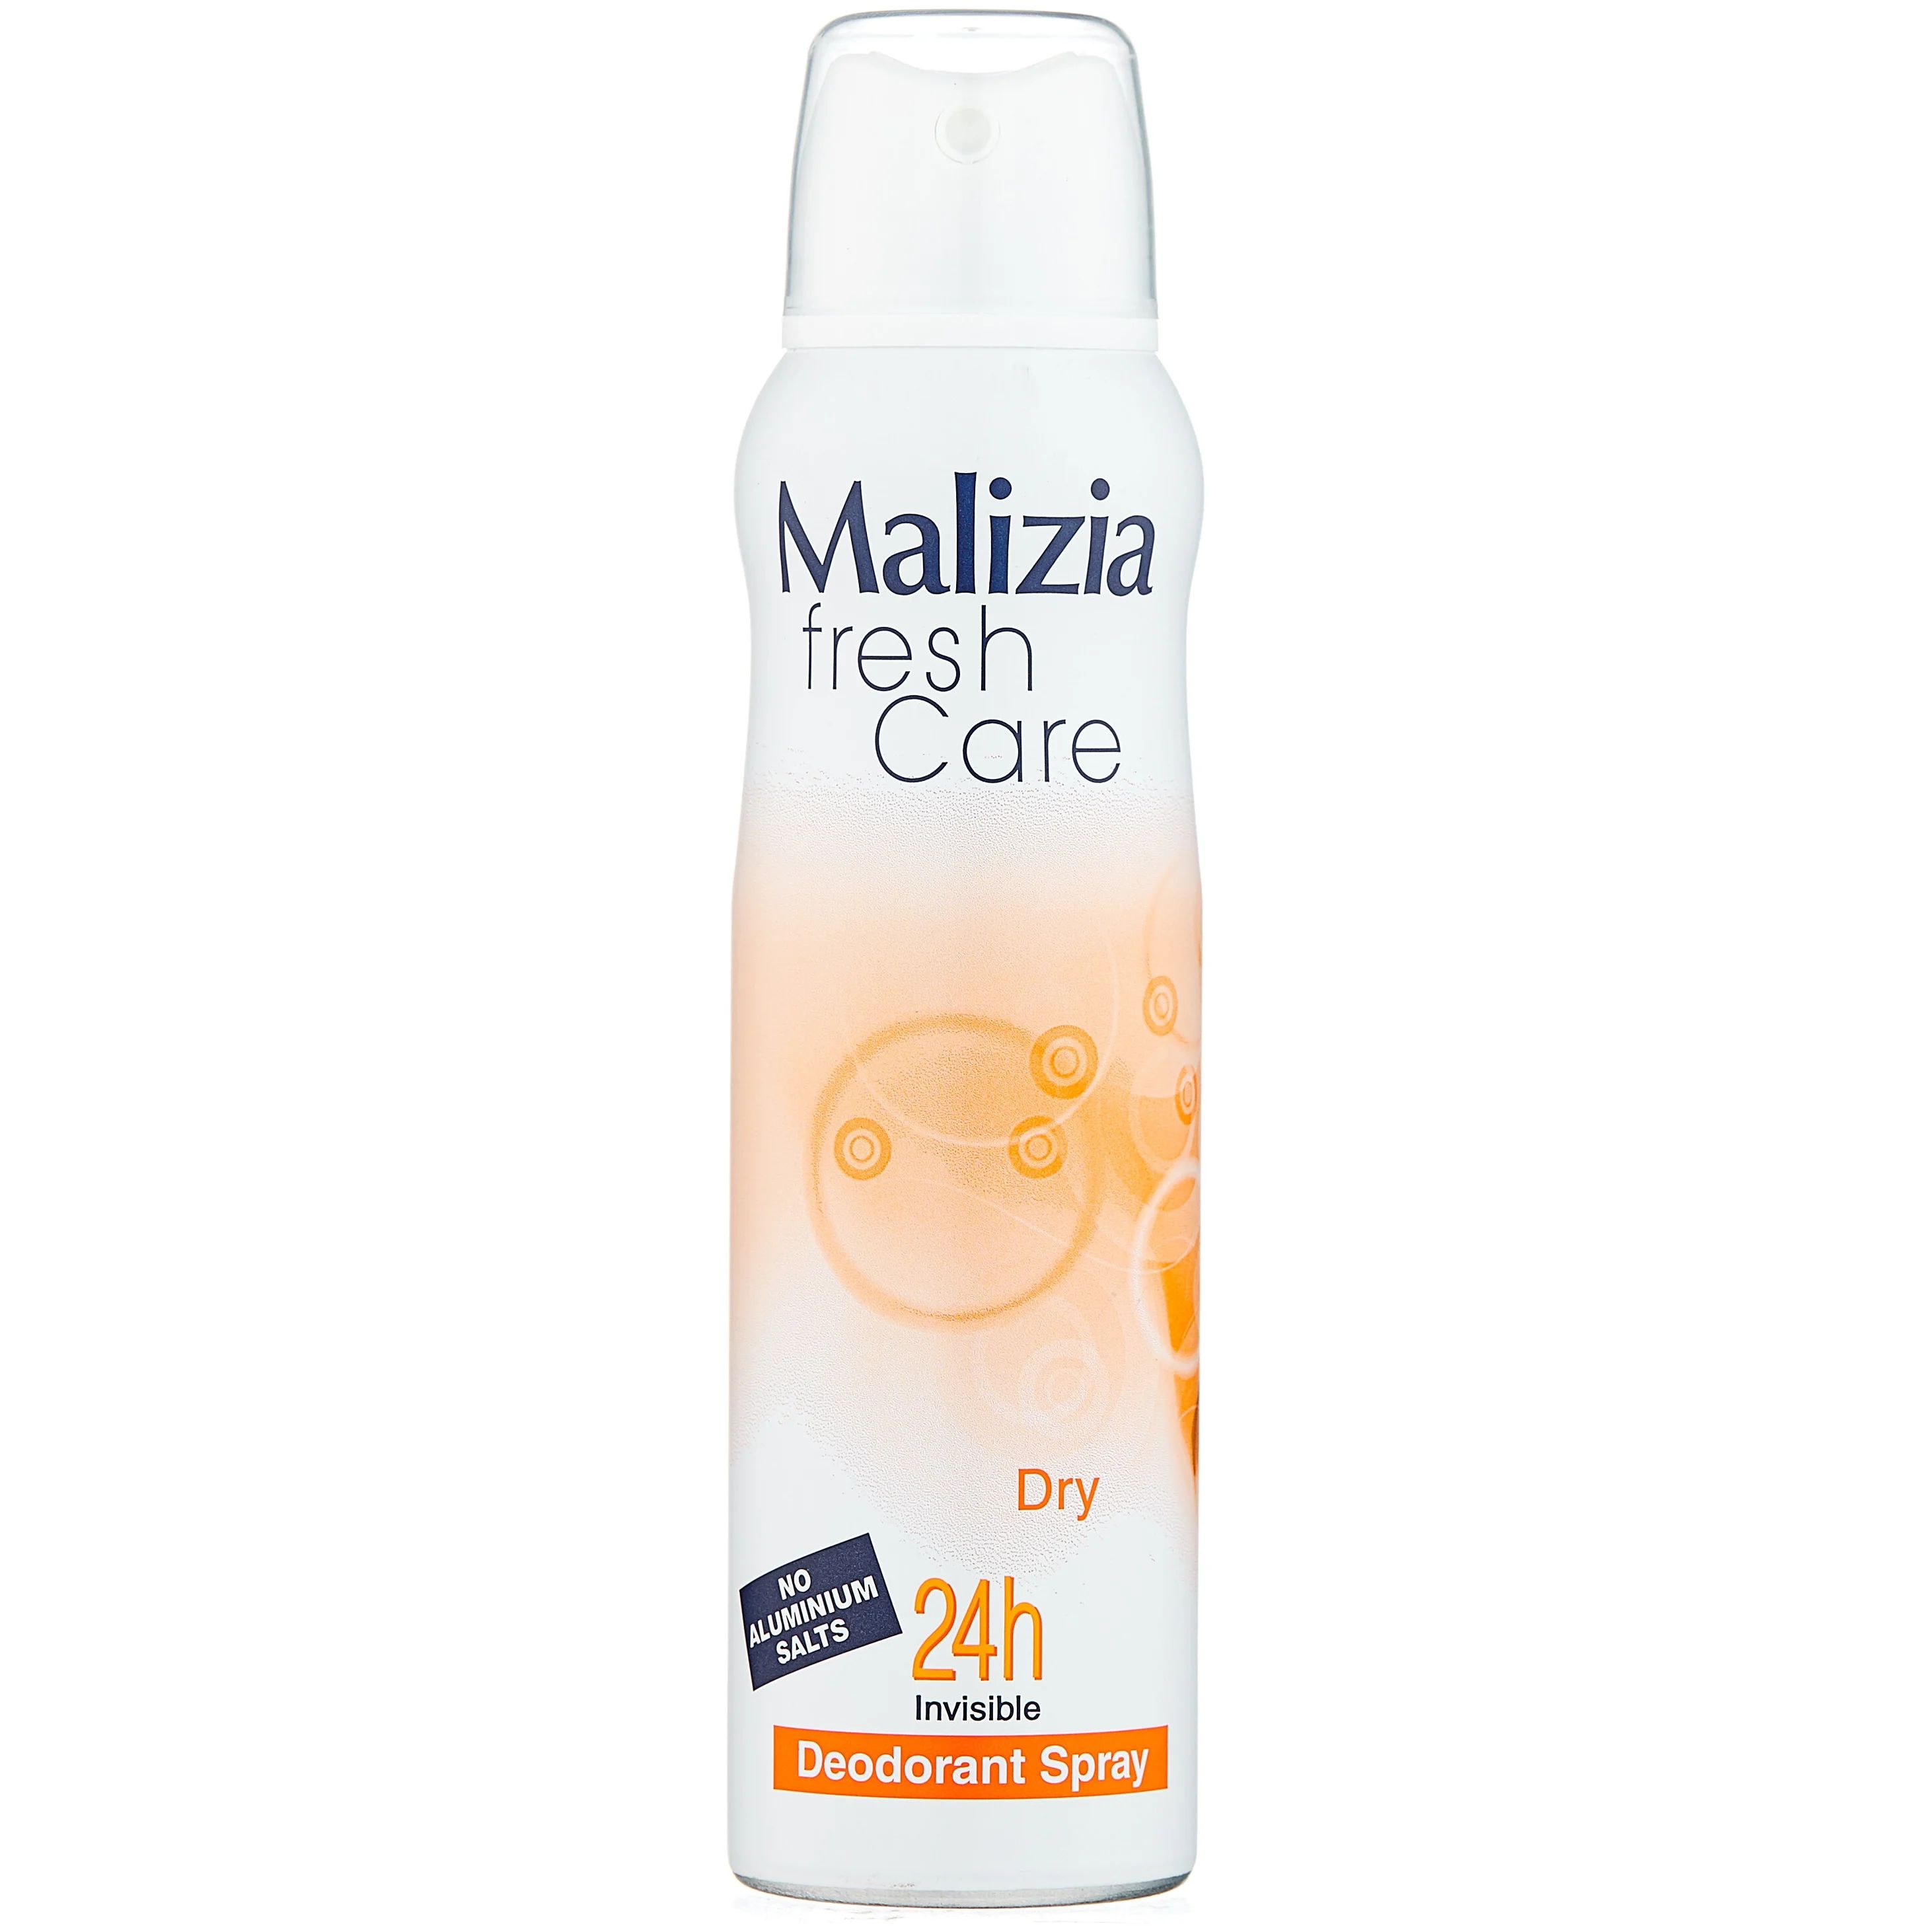 Дезодорант Malizia fresh care Dry 150 мл malizia дезодорант антиперспирант серии fresh care dry 150